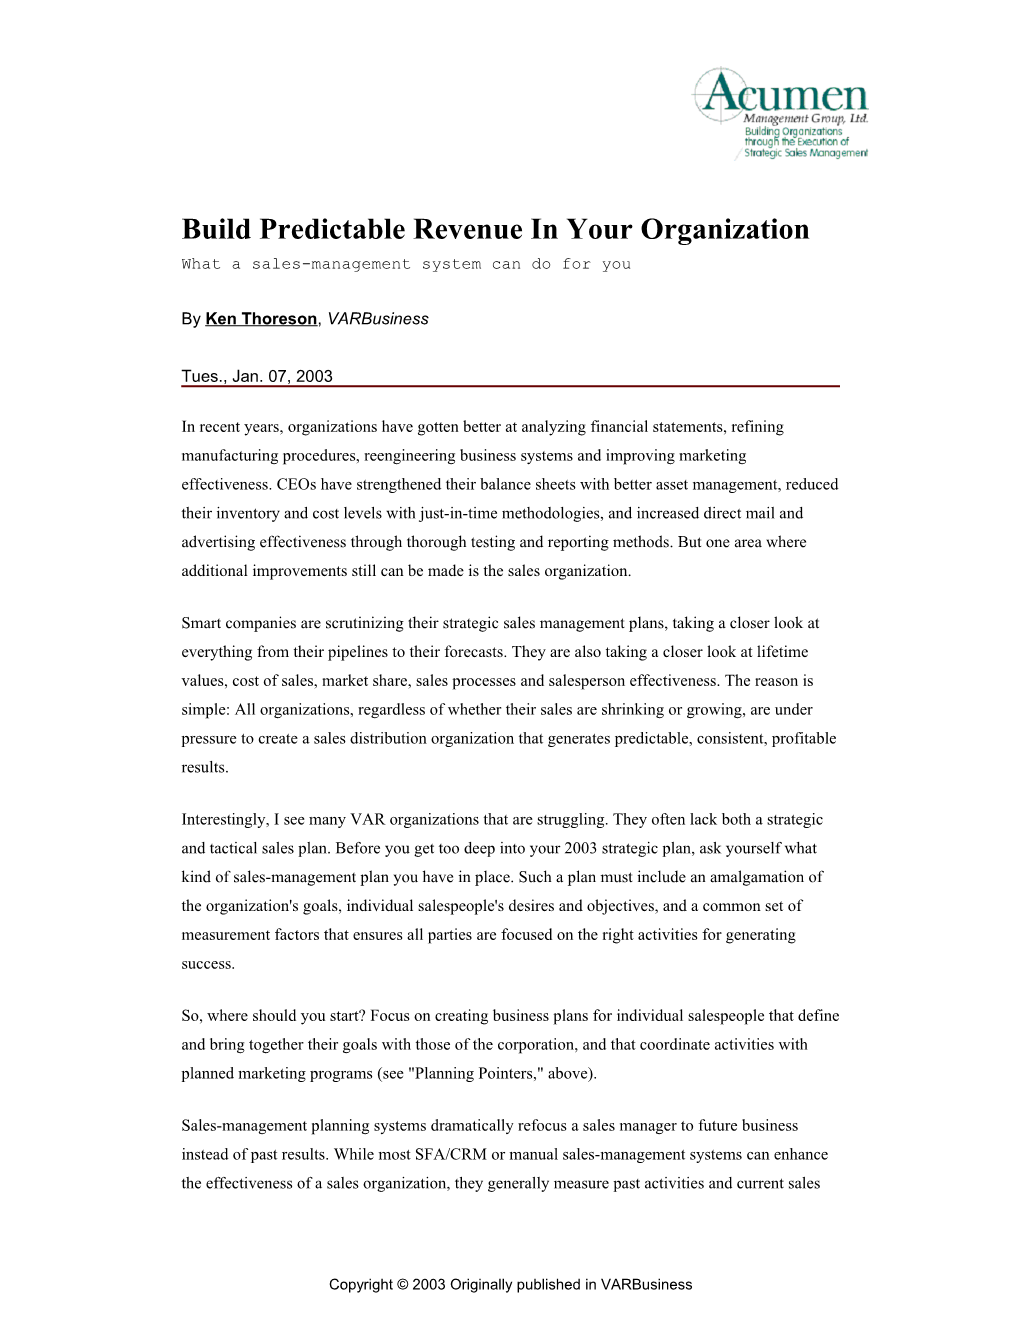 Build Predictable Revenue in Your Organization